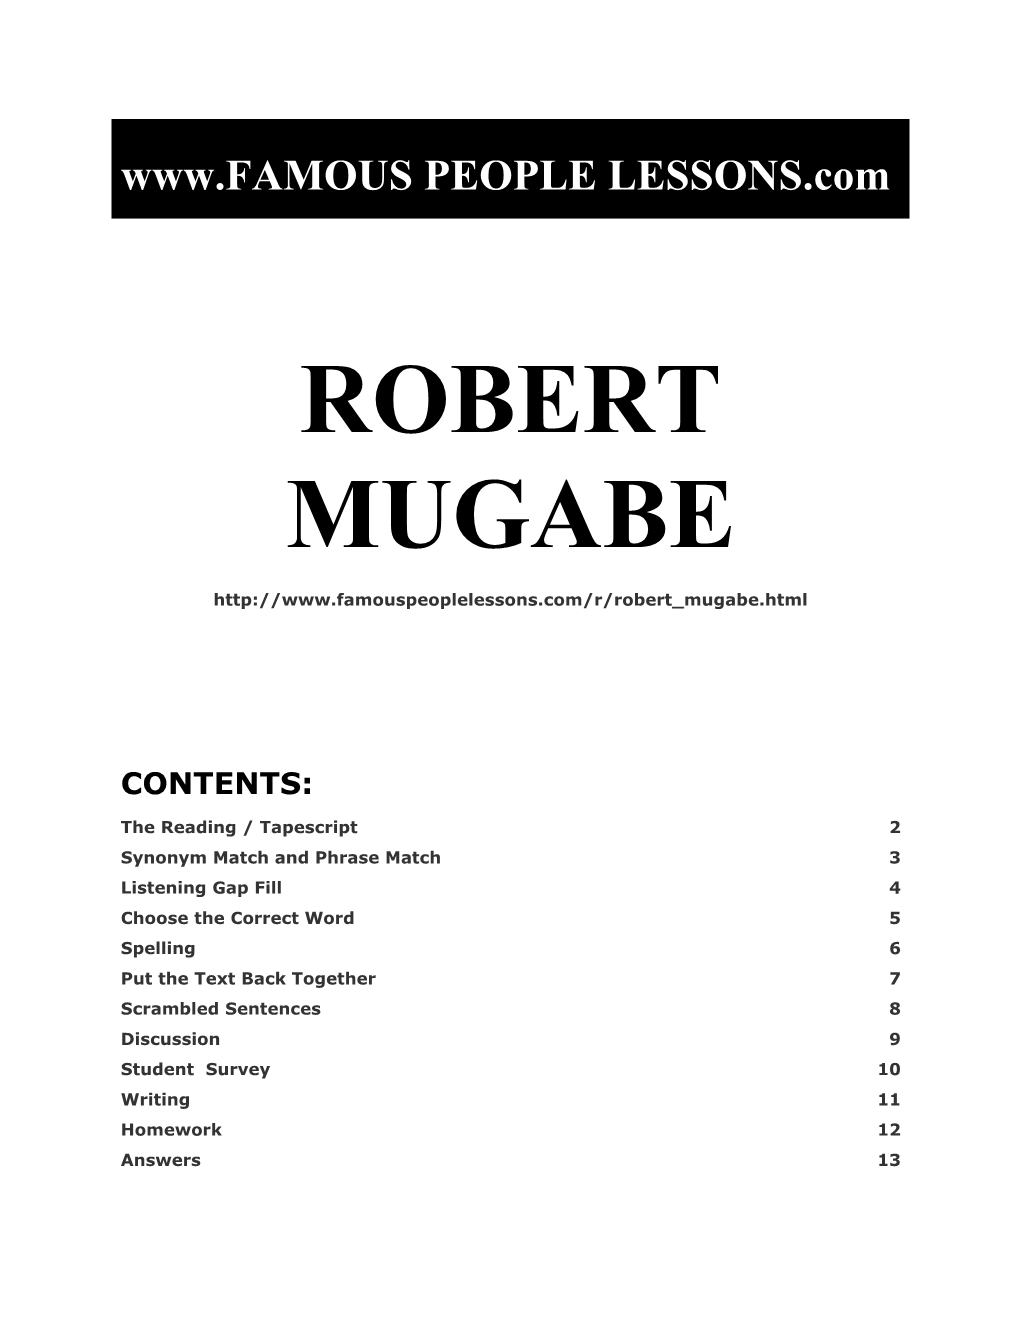 Famous People Lessons - Robert Mugabe